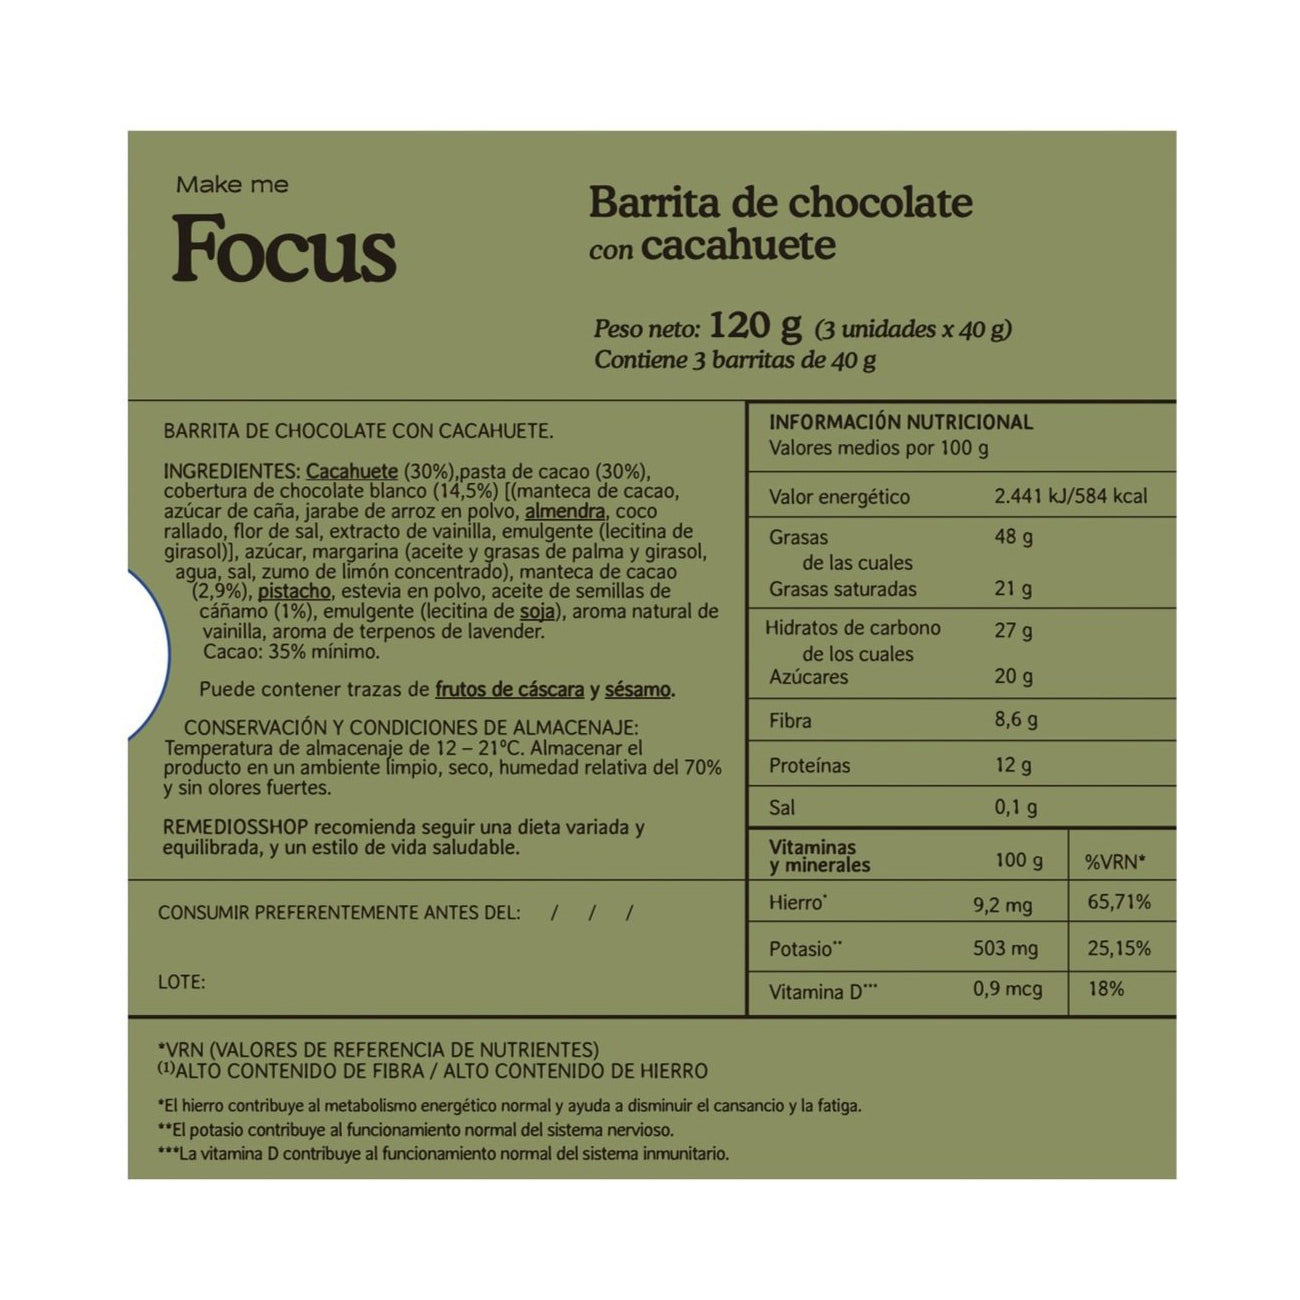 Chocolate Remedies - Focus